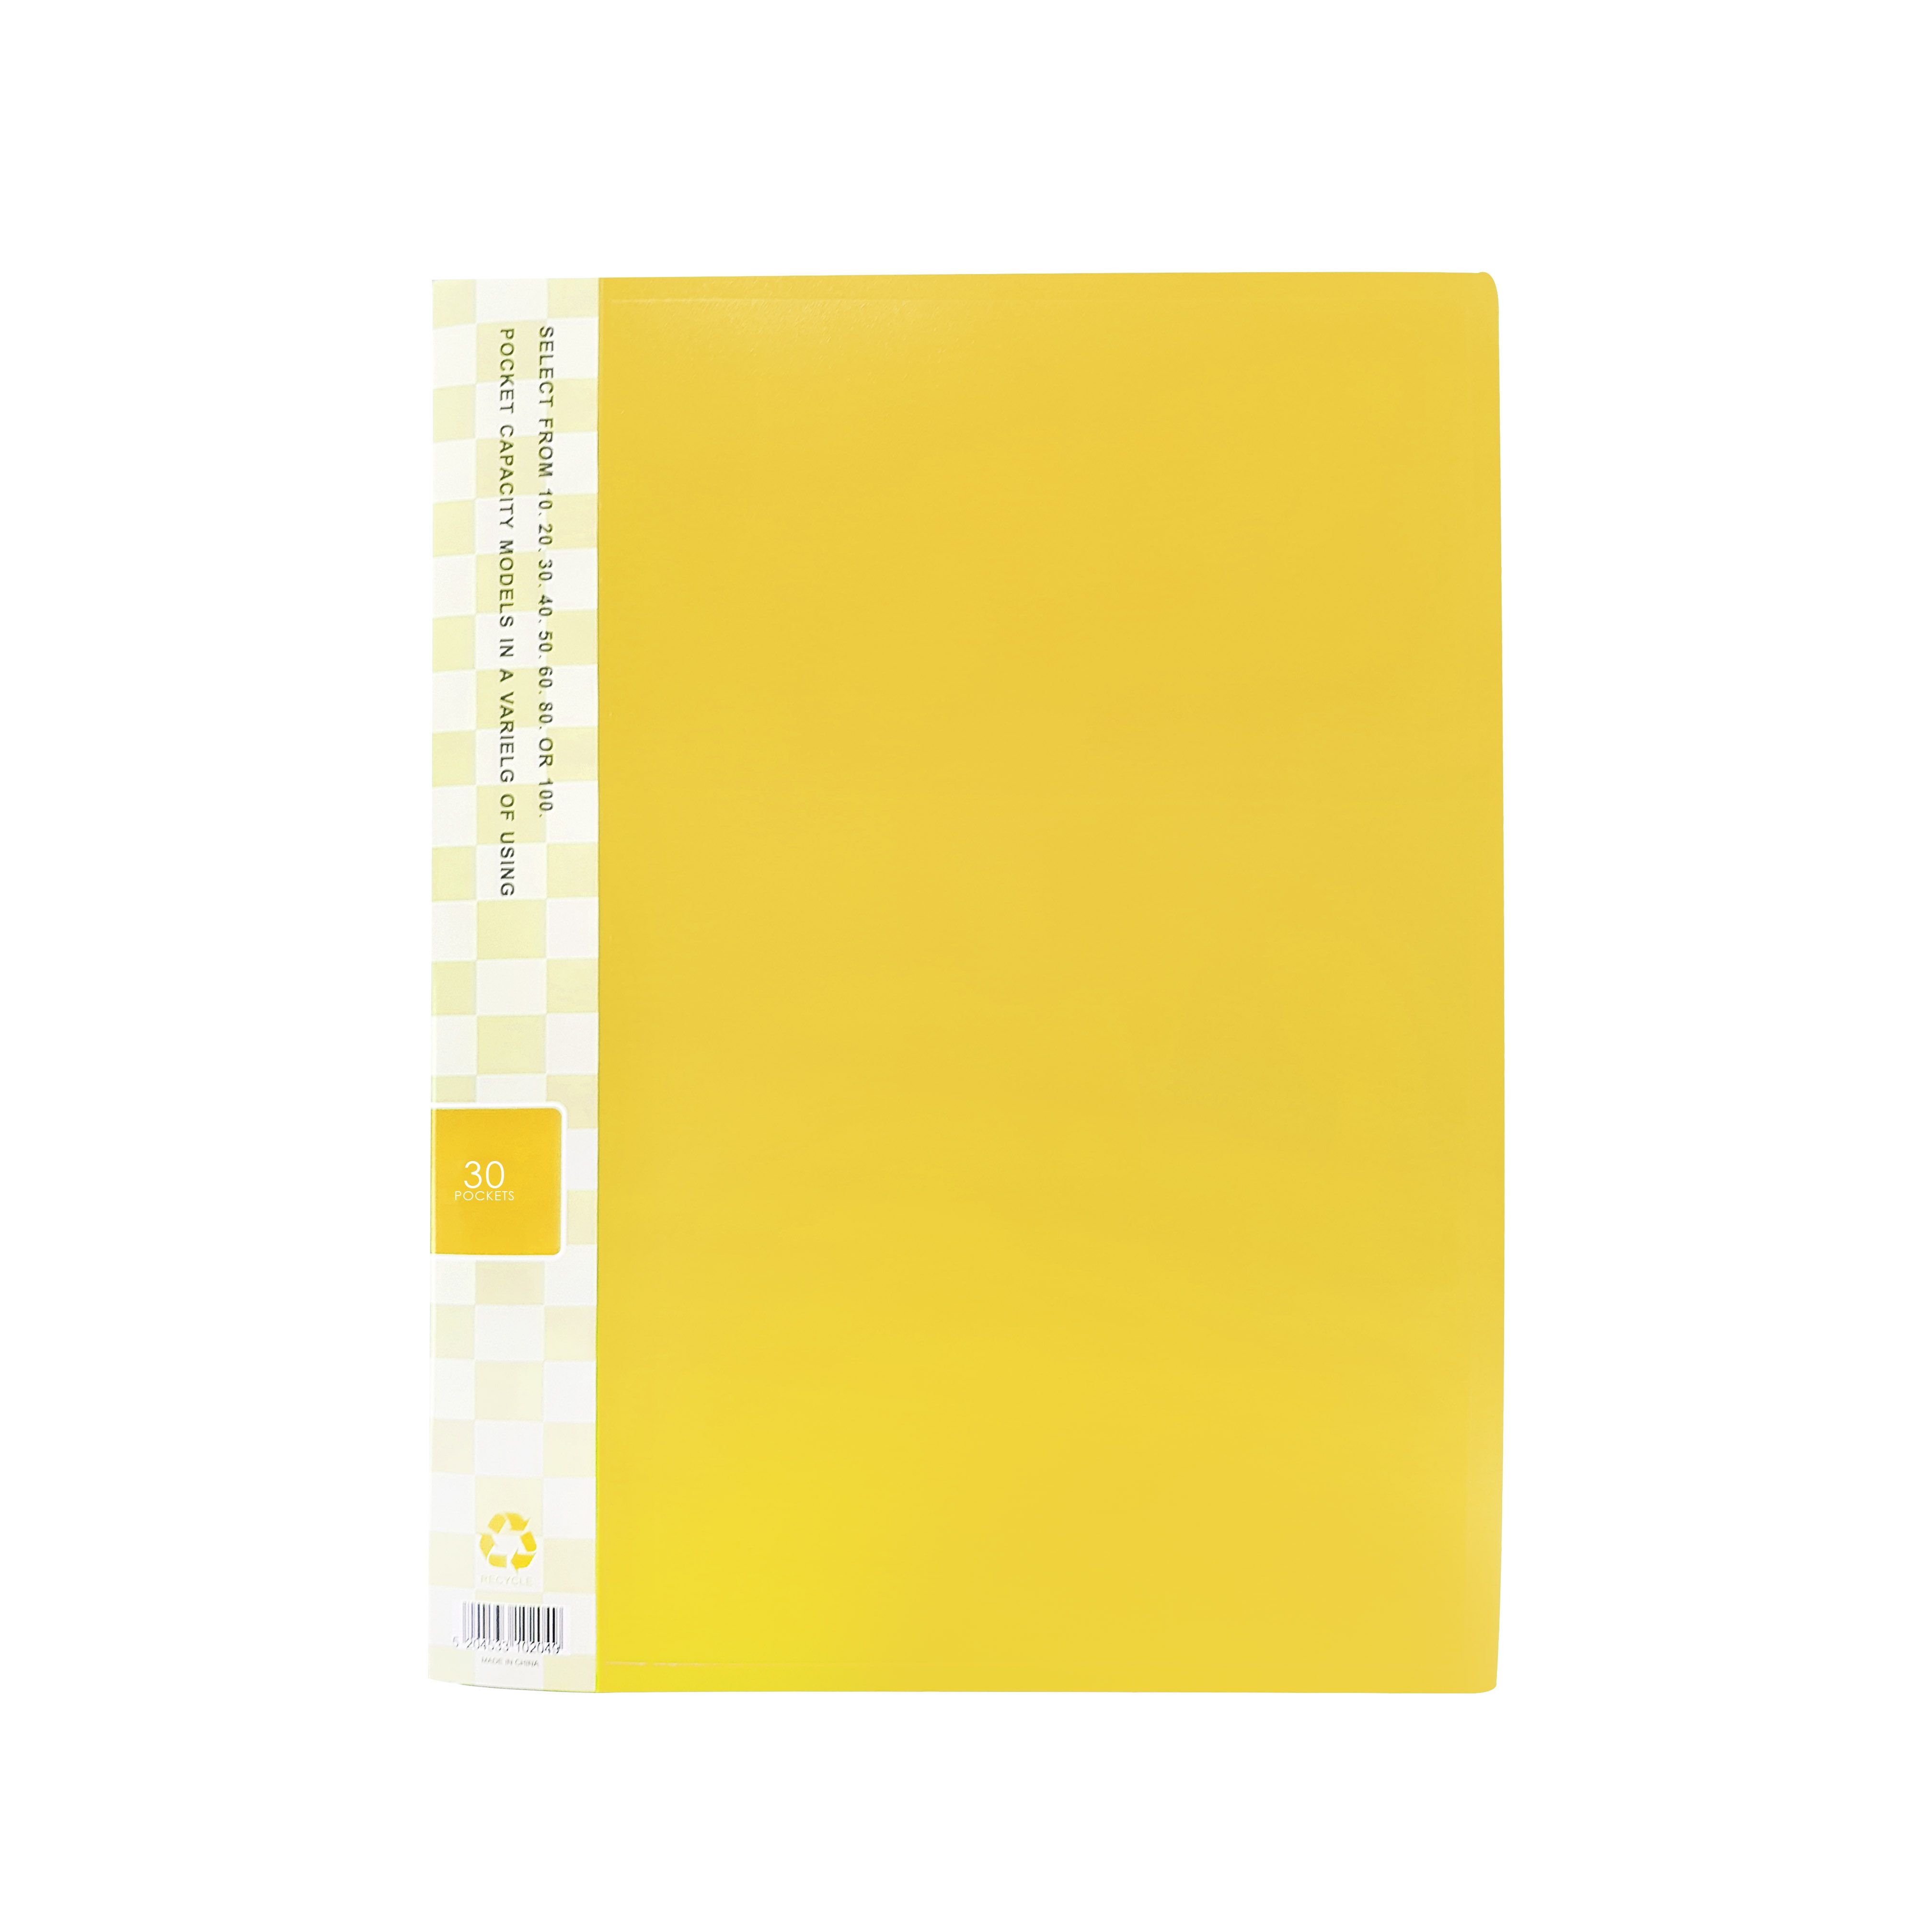 BASIC Nτοσιέ Σουπλ με 30 Διαφανείς Θήκες, Α4 σε 5 χρώματα - Kίτρινο